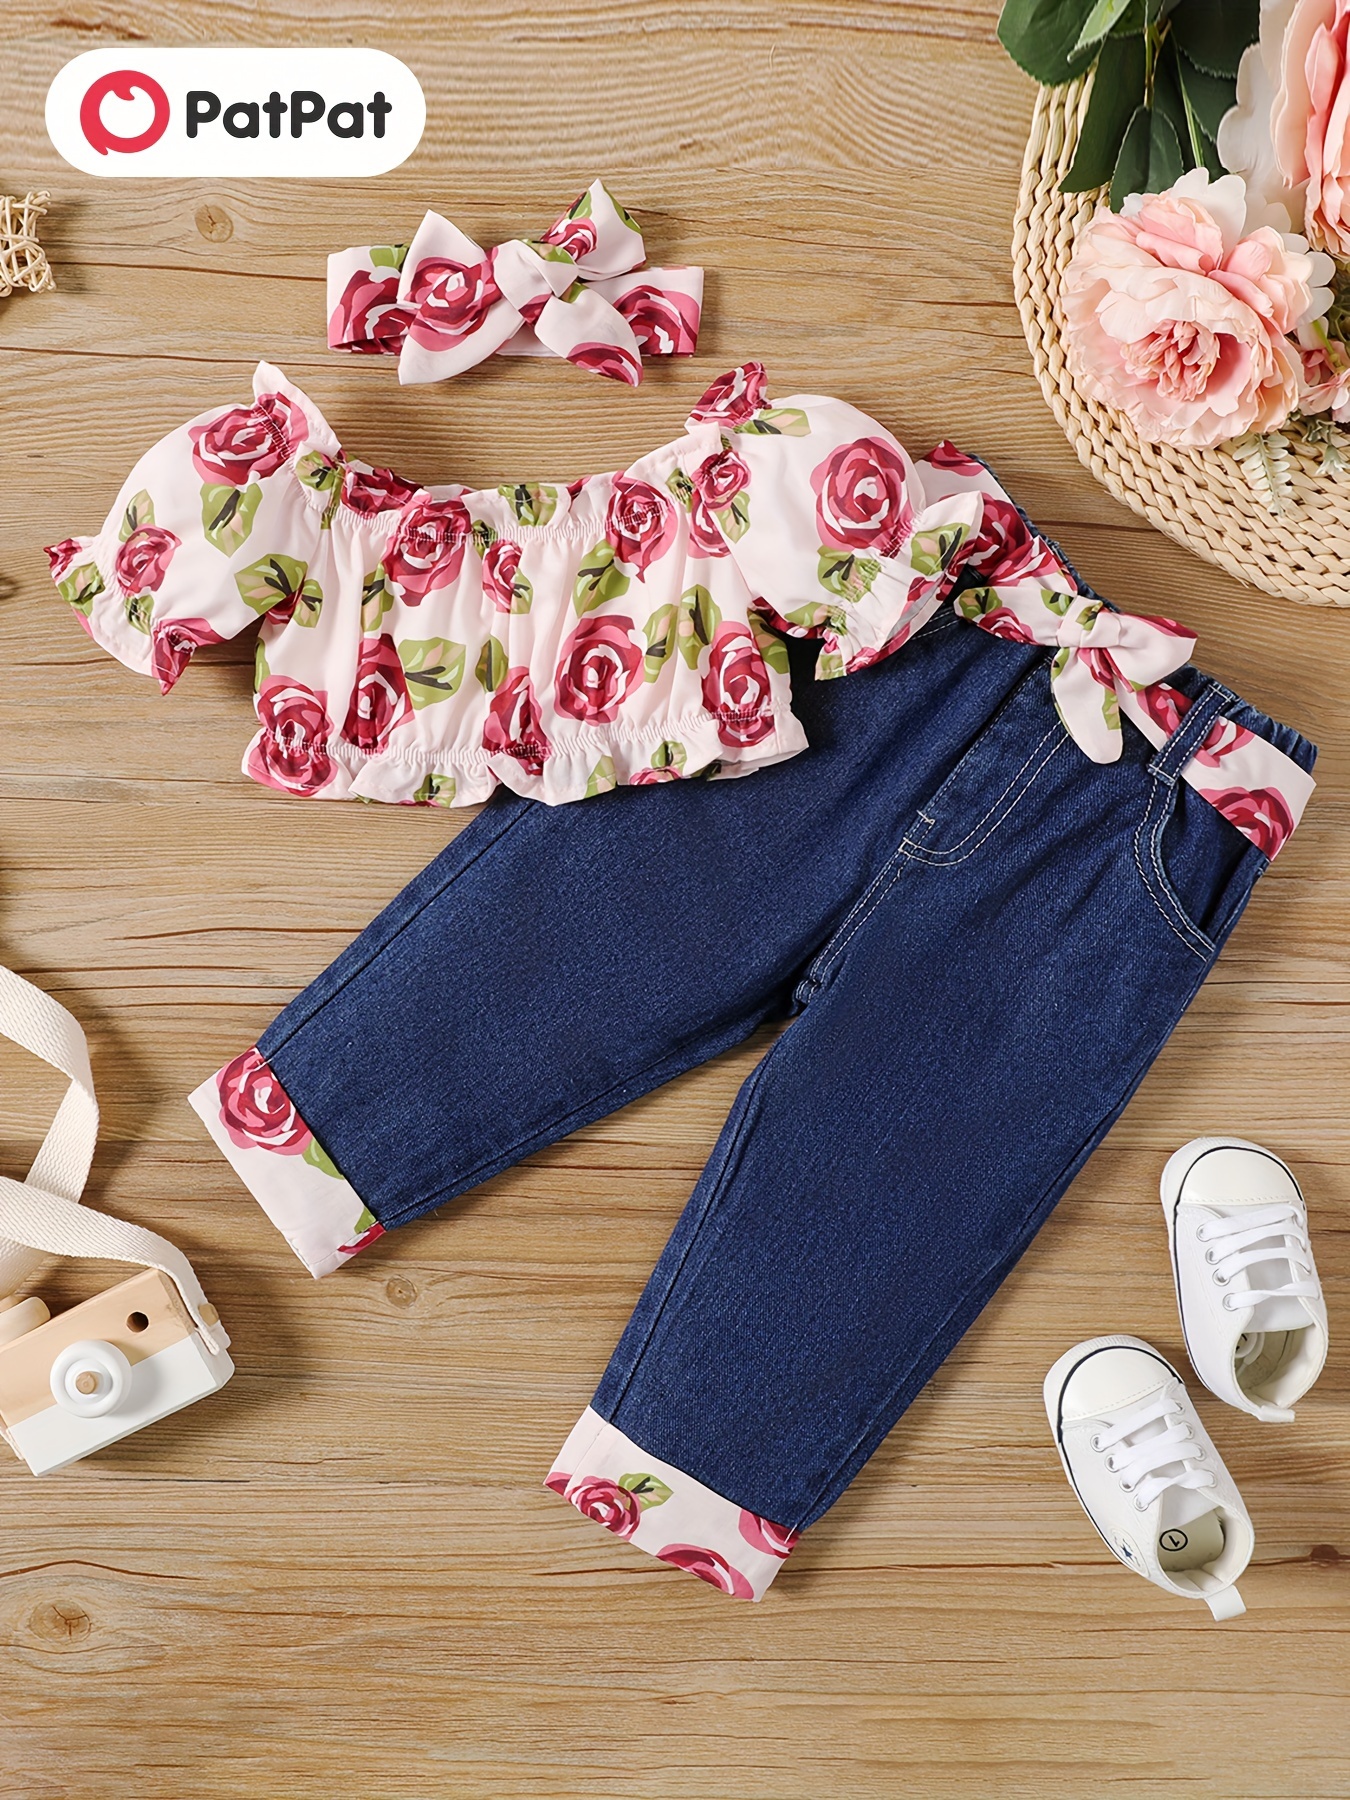 Cute Outfits for Kids Girls Sunflowers Prints Long Sleeves Tops Denim Bell  Bottom Jeans Pants Headband 3Pcs Set 